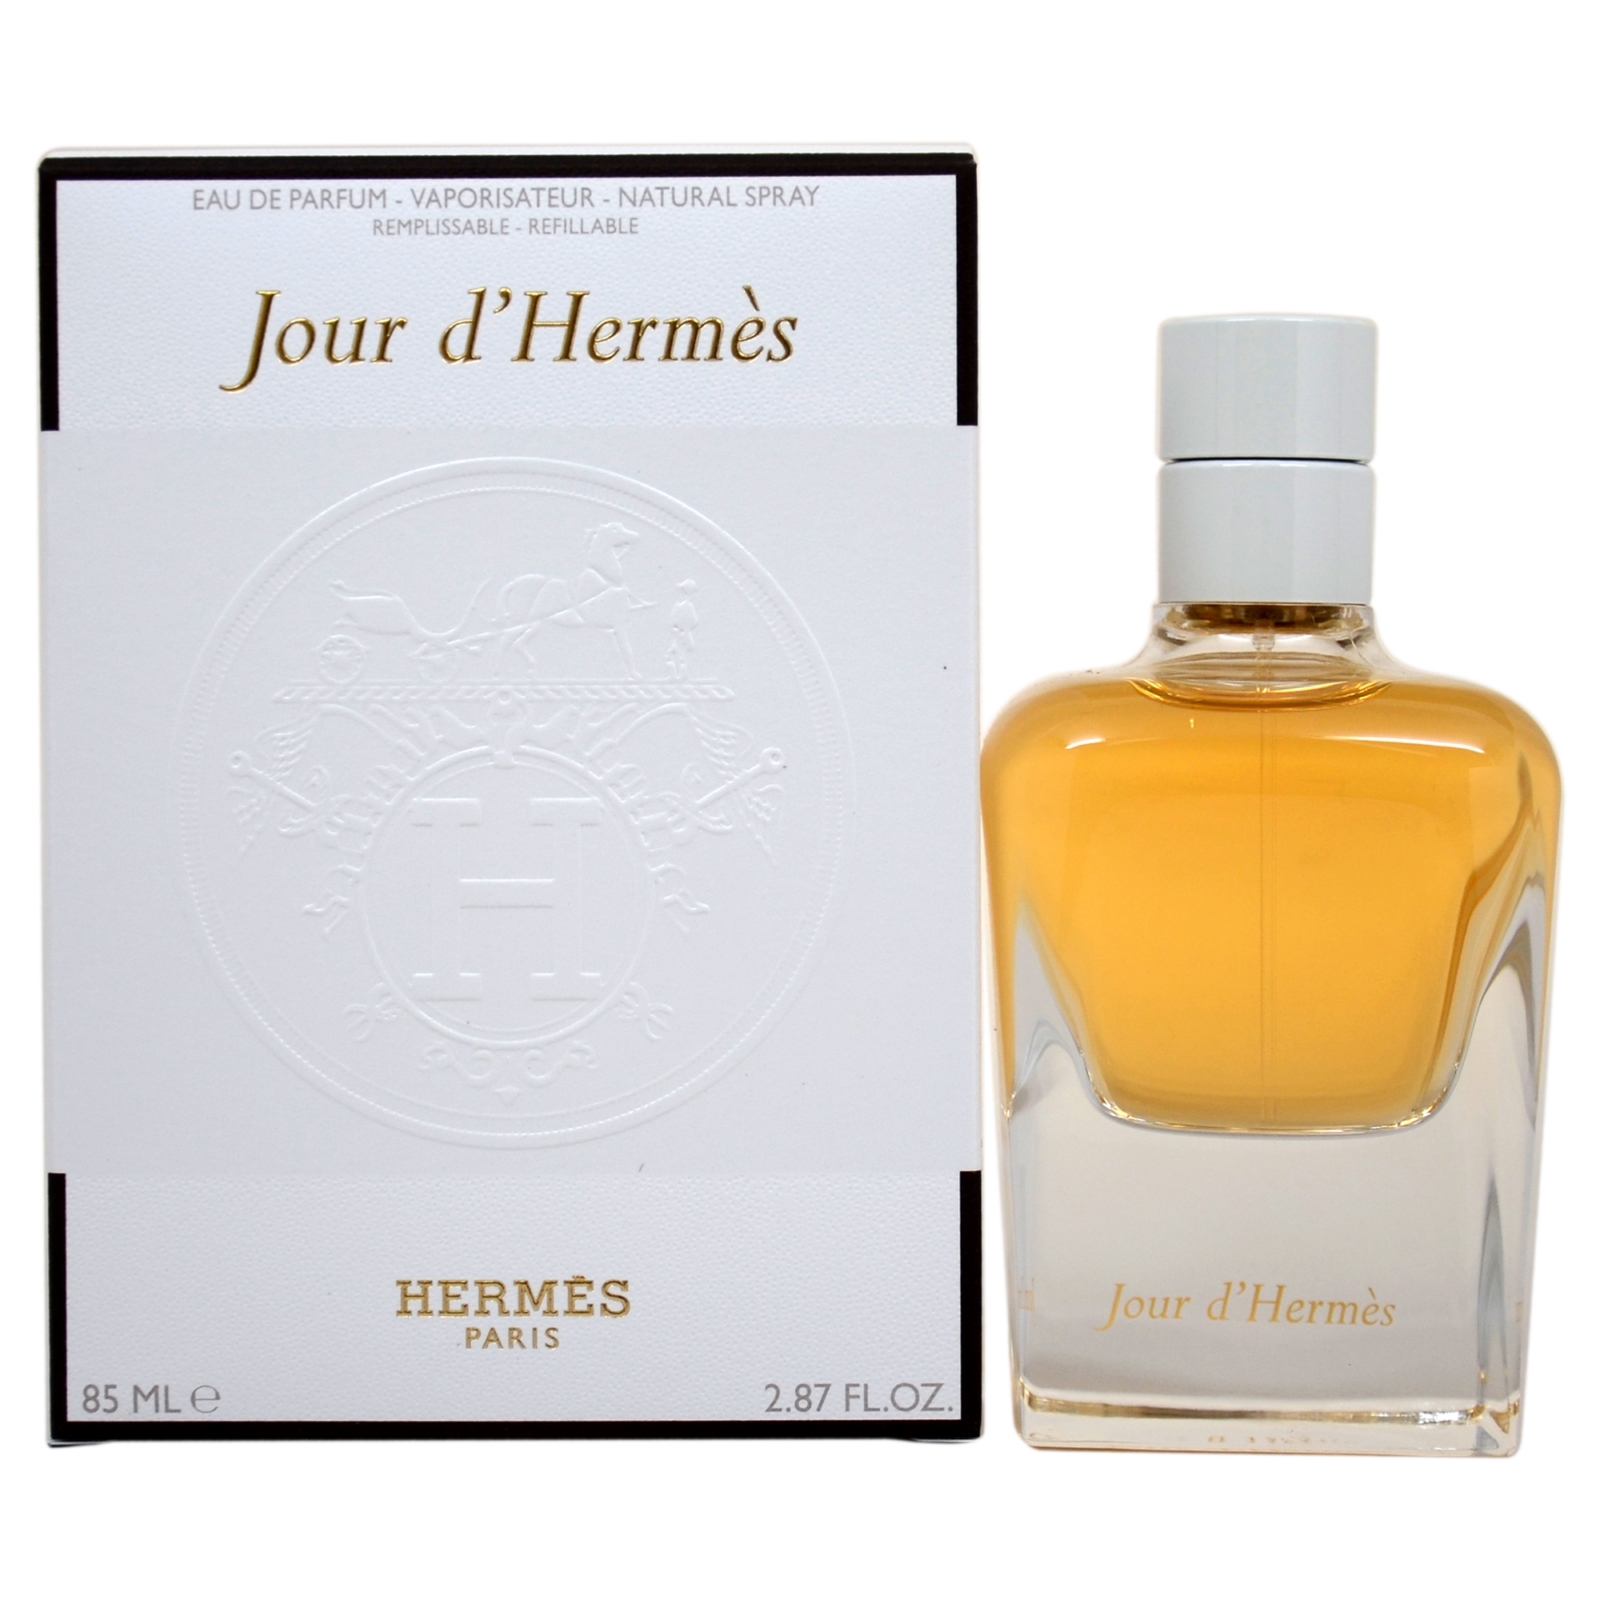 Гермес продают. Jour d'Hermes 85 ml. Jour Hermes Парфюм. Hermes jour d'Hermes (w) EDP 85 ml Refillable fr. Jour d'Hermes от Hermes.